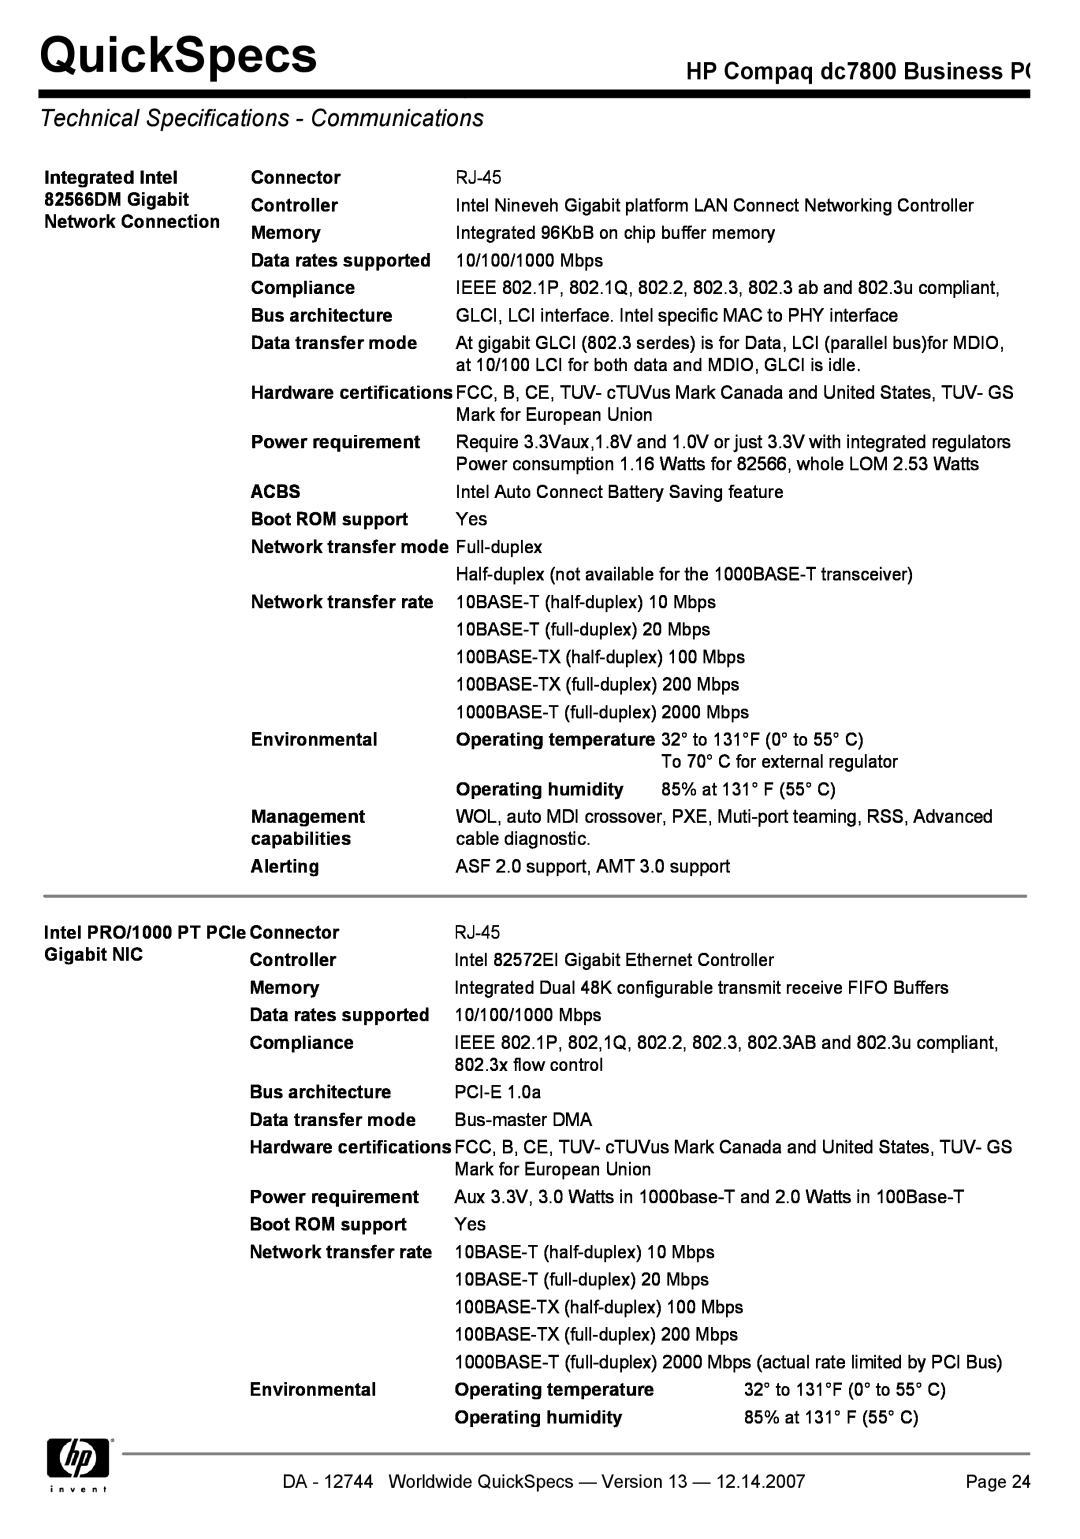 Compaq manual Technical Specifications - Communications, QuickSpecs, HP Compaq dc7800 Business PC 